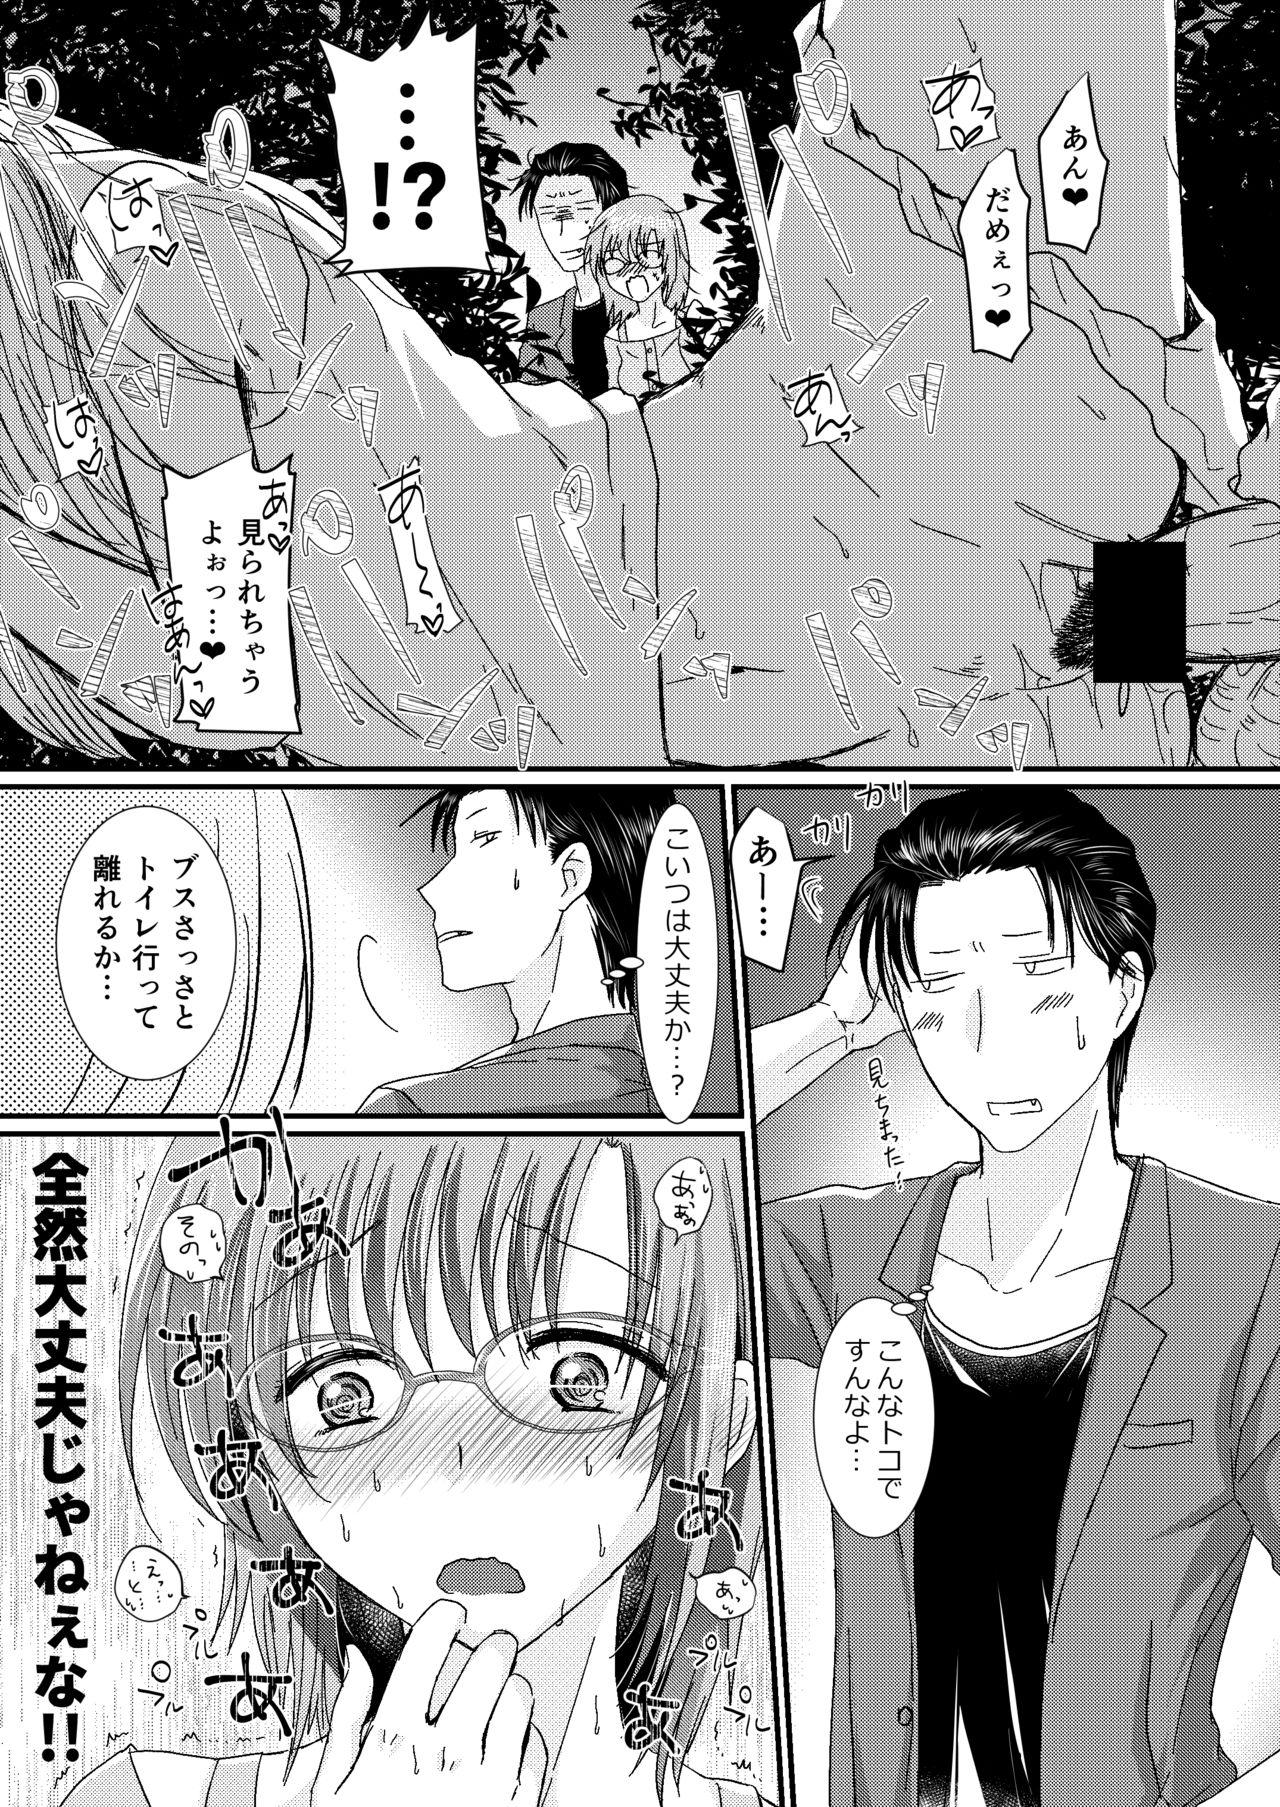 Seijin Muke Manga 16p 19